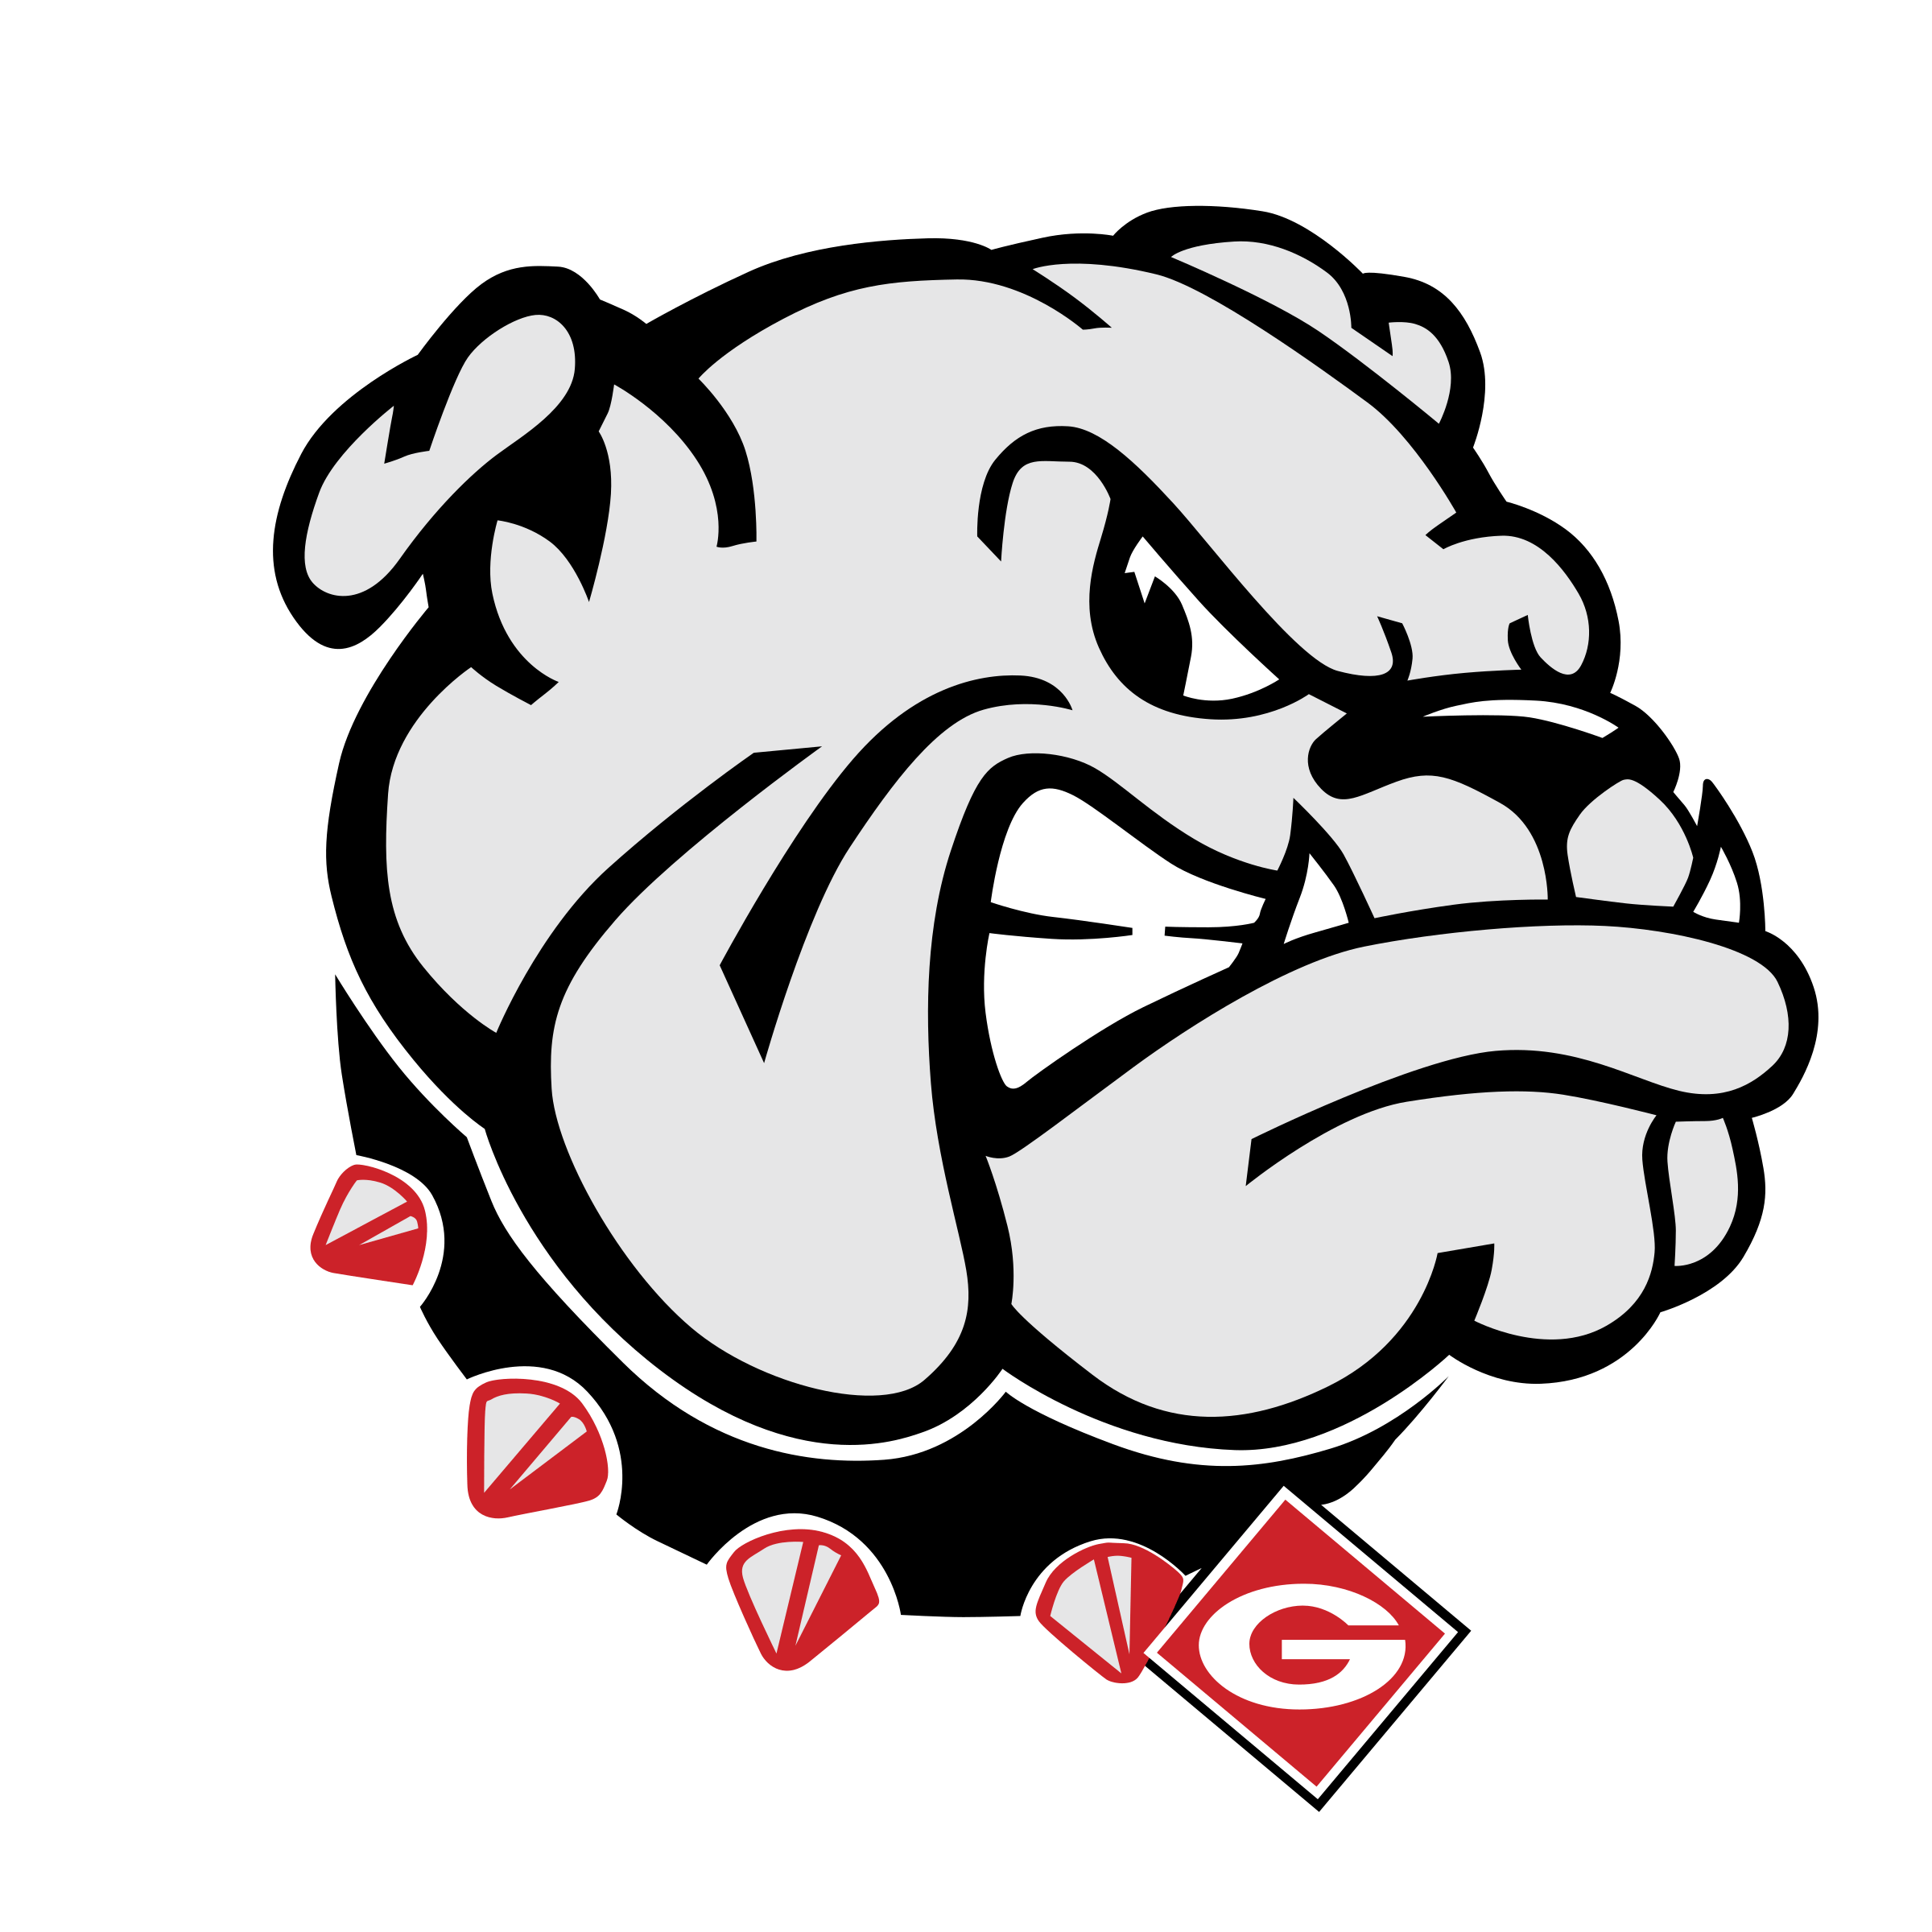 Georgia Bulldogs Logo - Georgia Bulldogs Logo PNG Transparent & SVG Vector - Freebie Supply